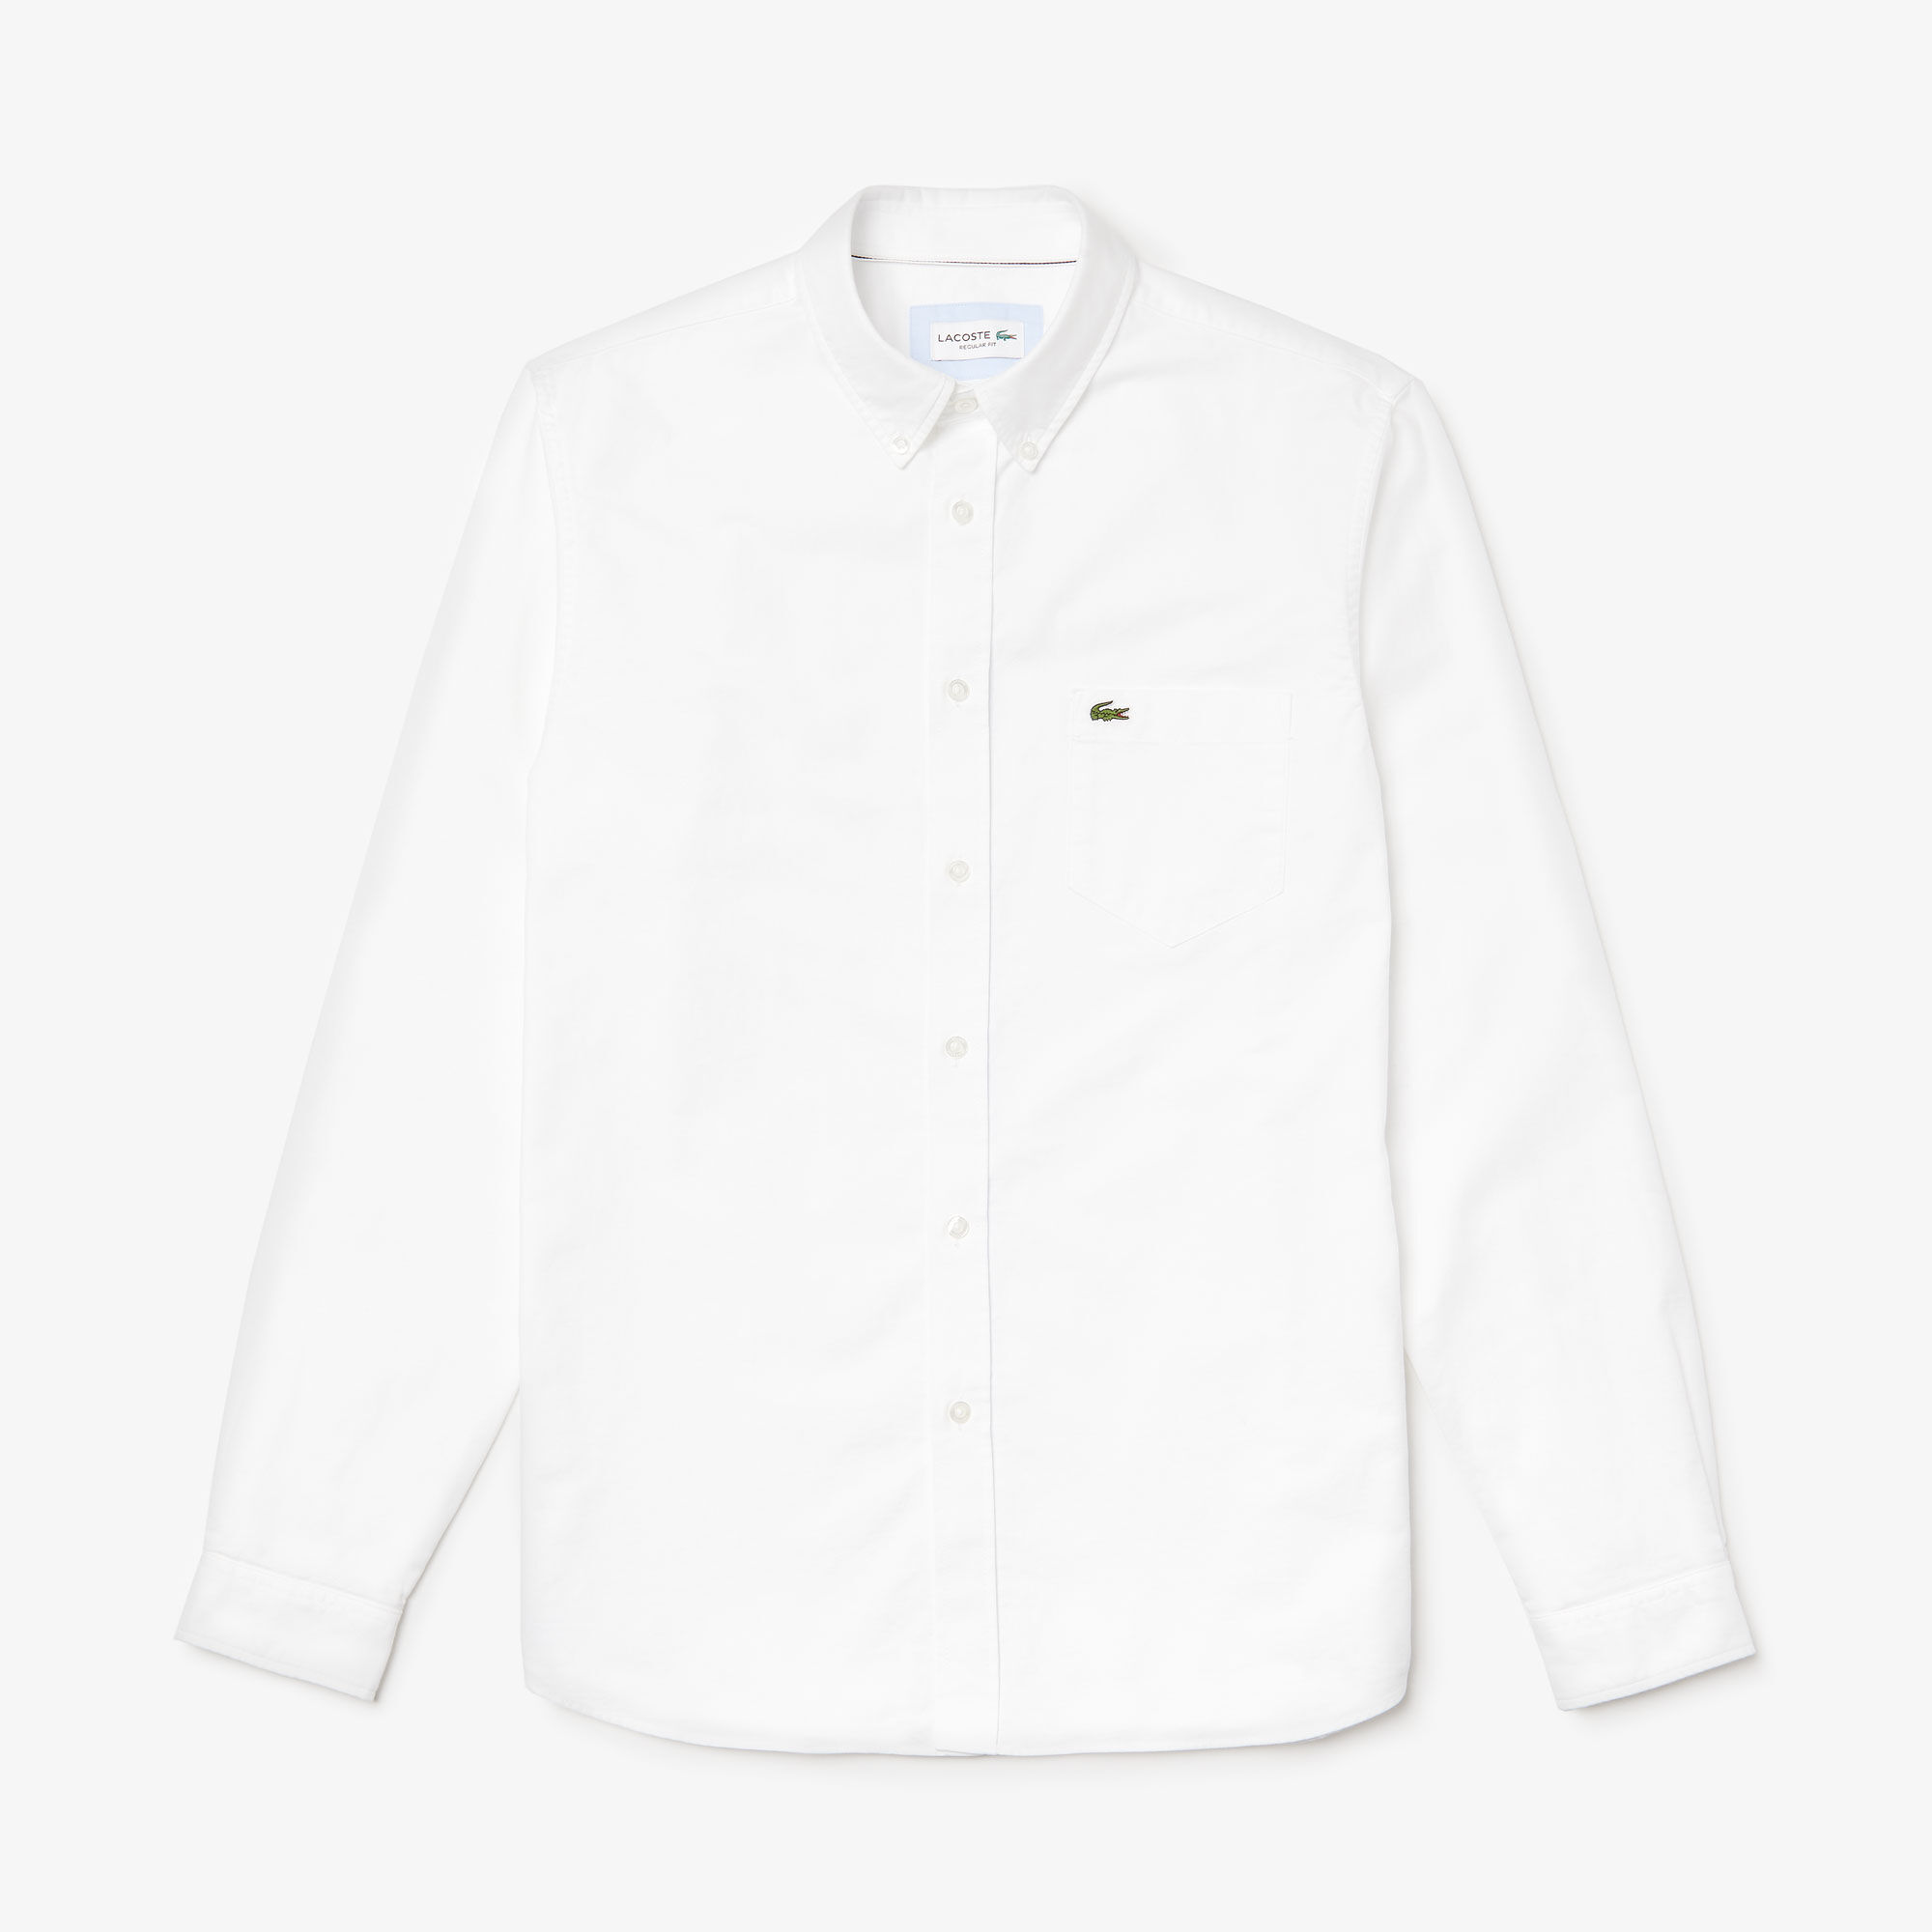 white shirt lacoste